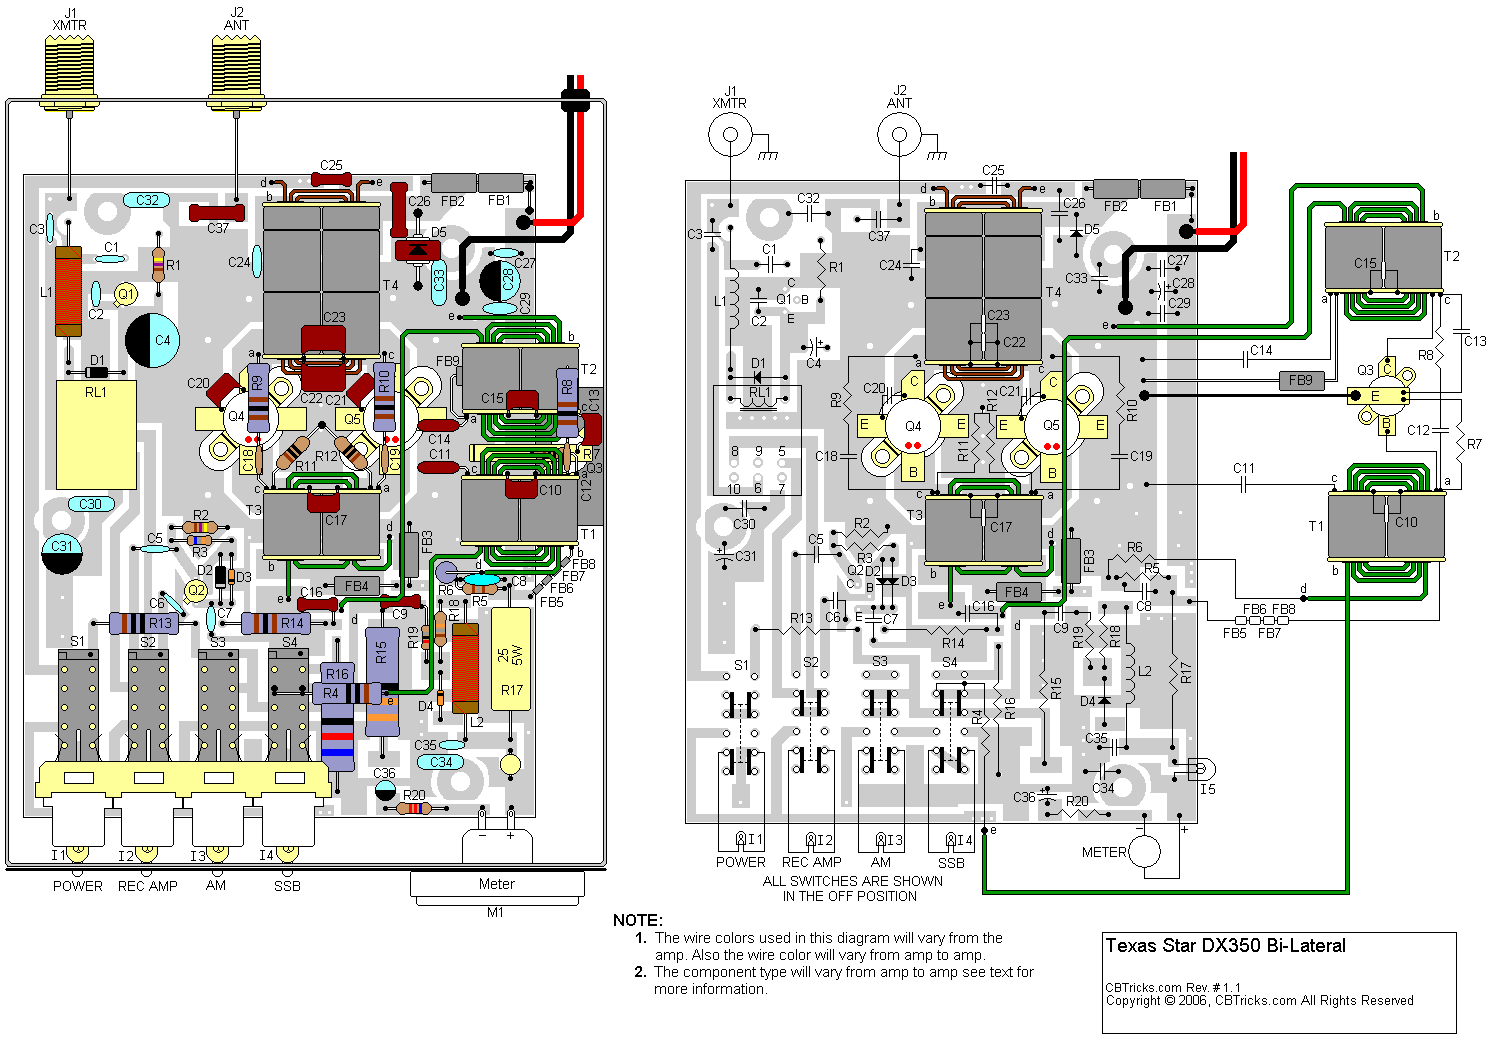 dx350_bi-lateral_layout.gif